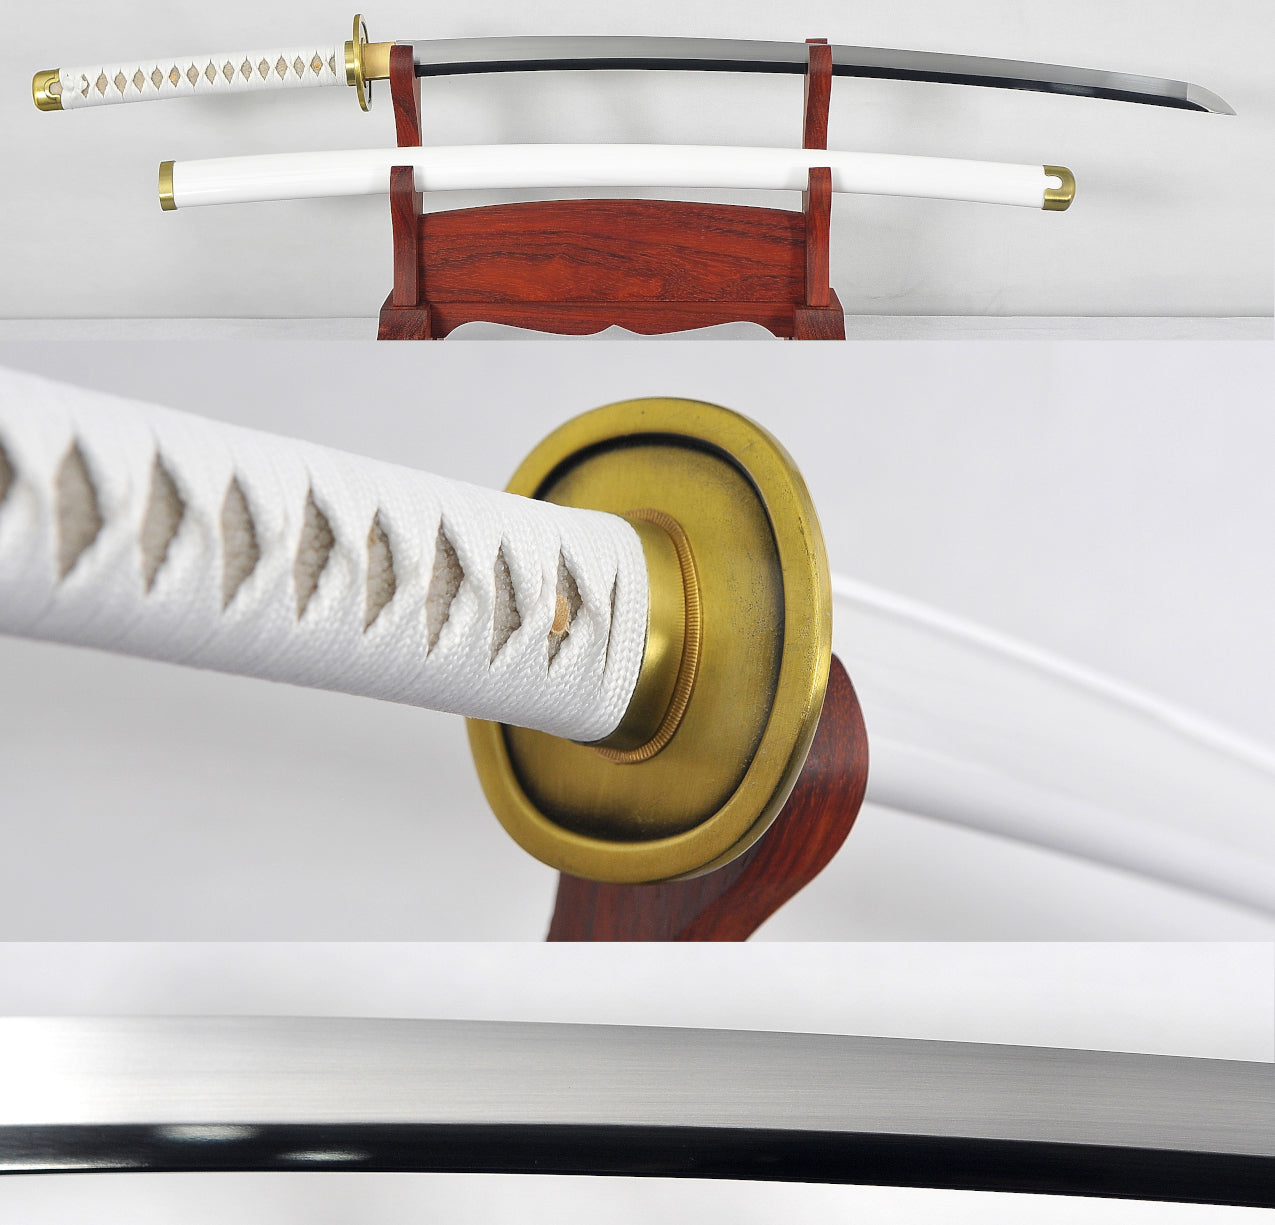 Anime Katana Sword With Scabbard (25 cm) Design 8 - Shubheksha